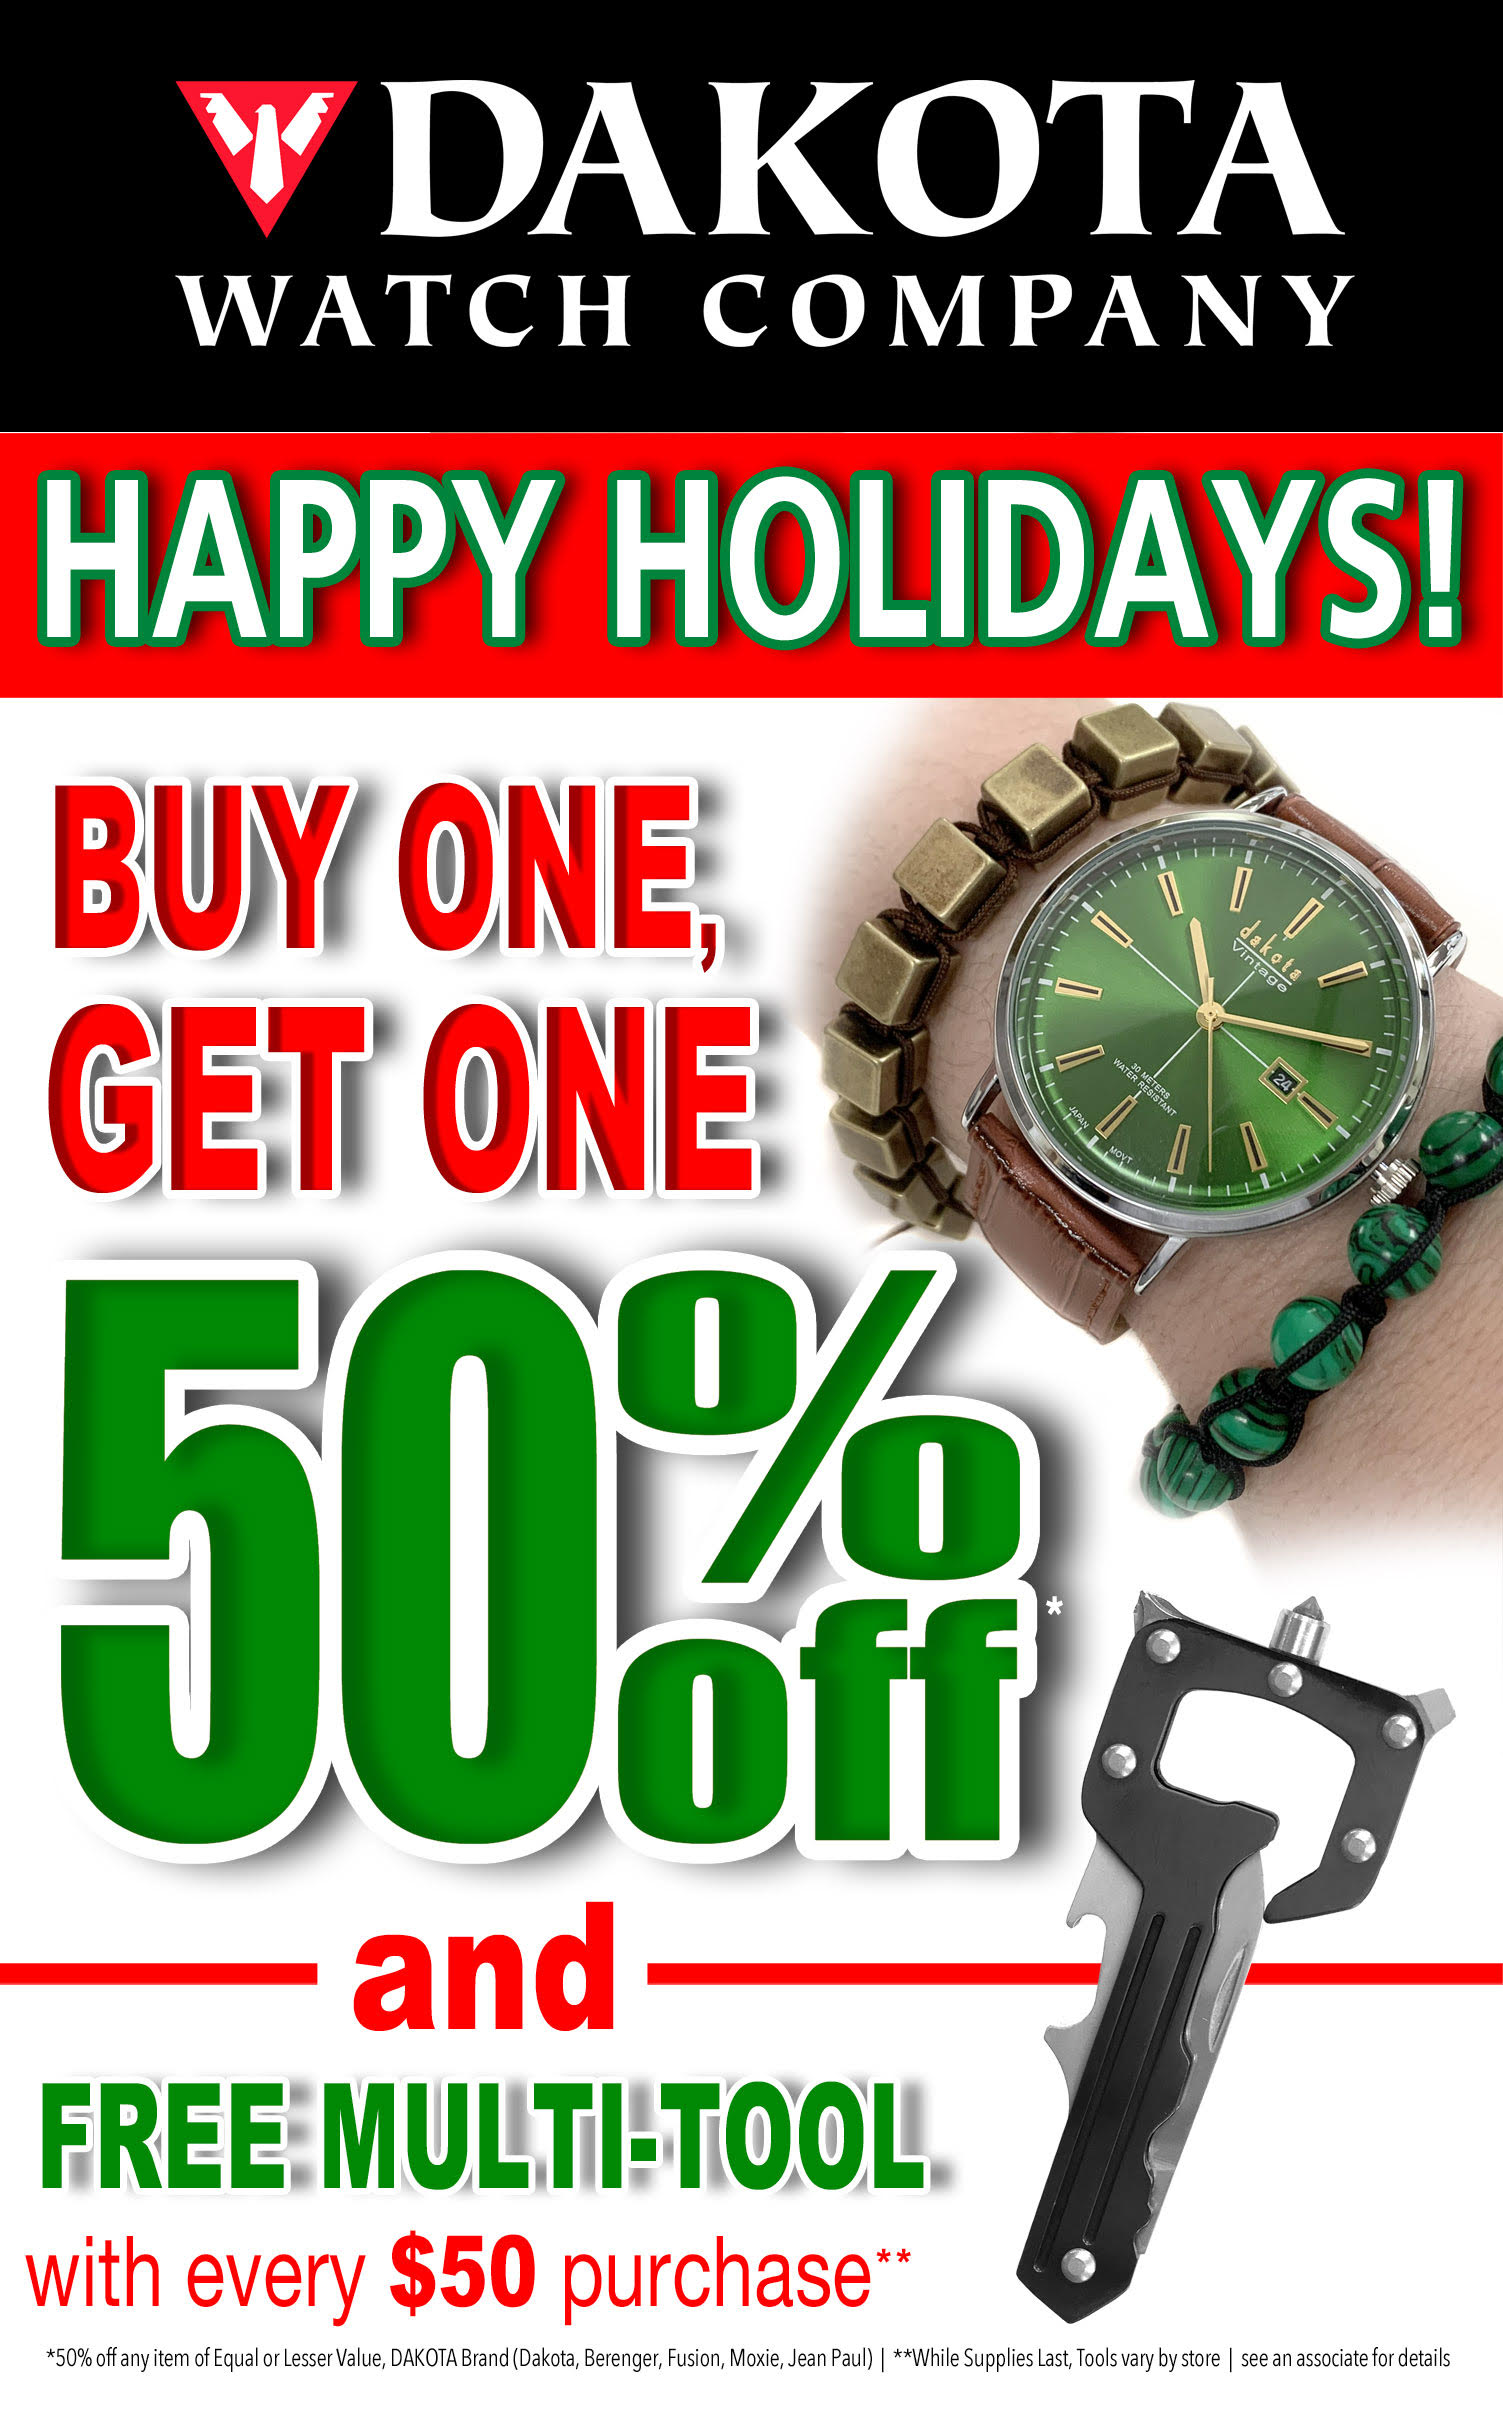 Buy One Get One 50% Off from Dakota Watch Company